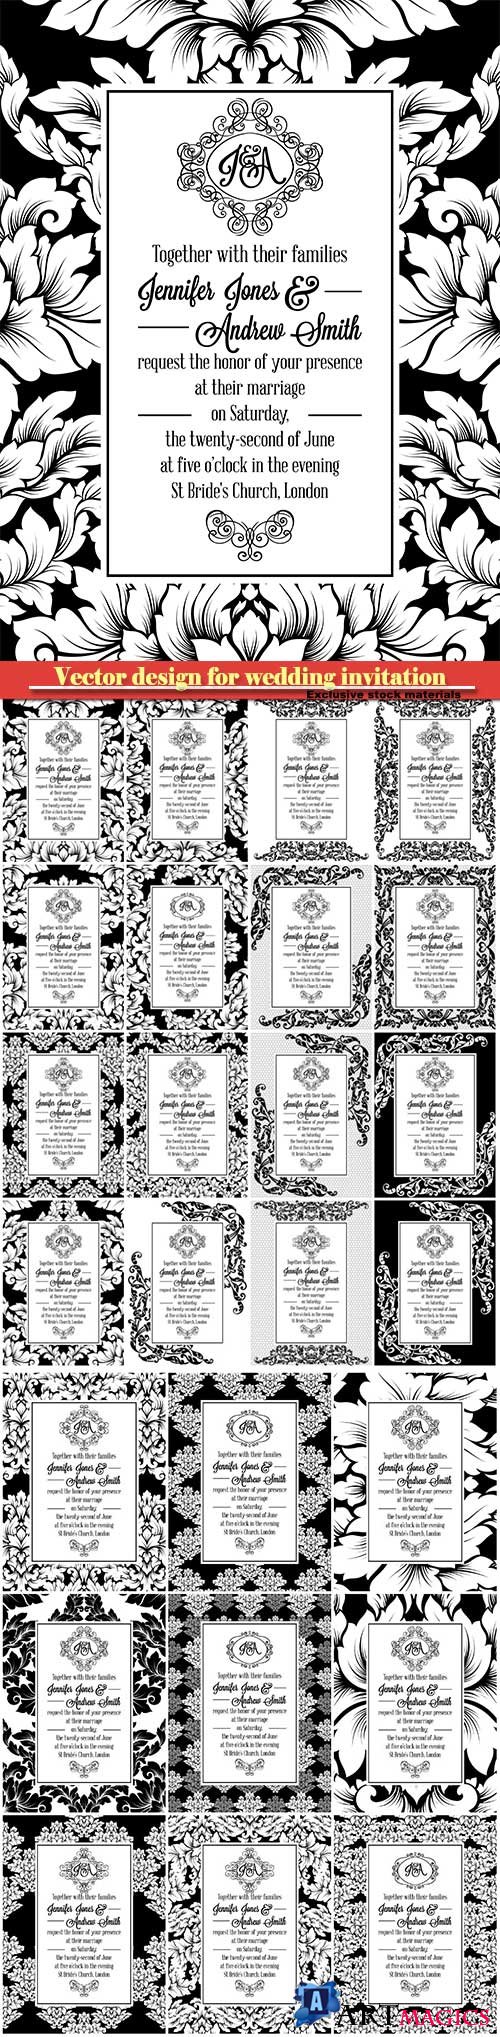 Damask victorian brocade pattern design for wedding invitation, floral swirls royal frame